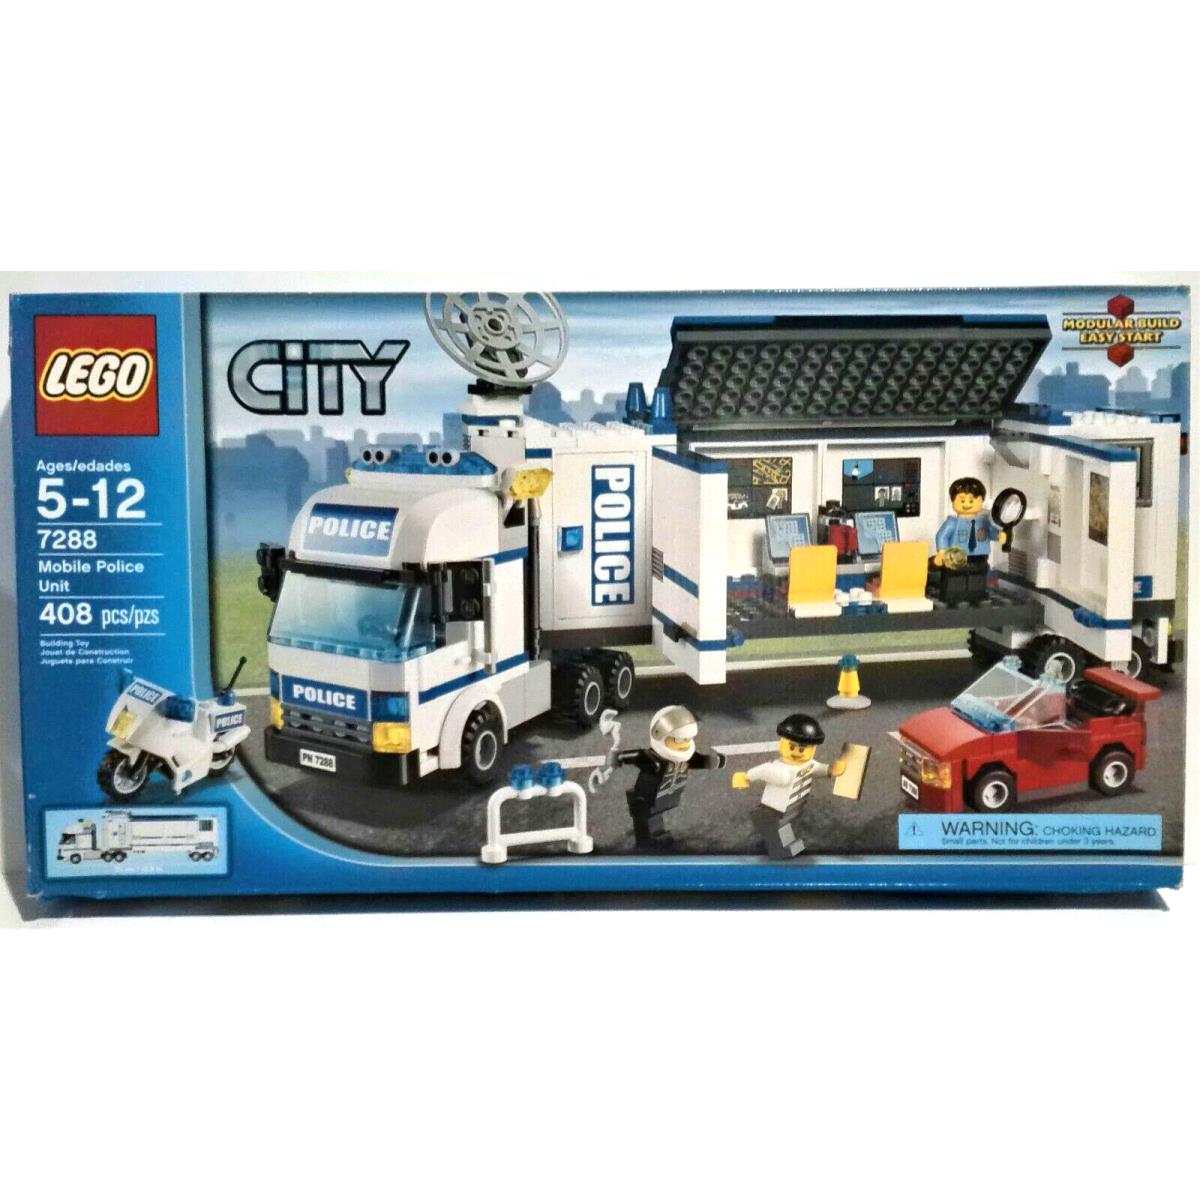 Lego City: 7288 408 Pcs Mobile Police Unit Building Toy Misb Retired